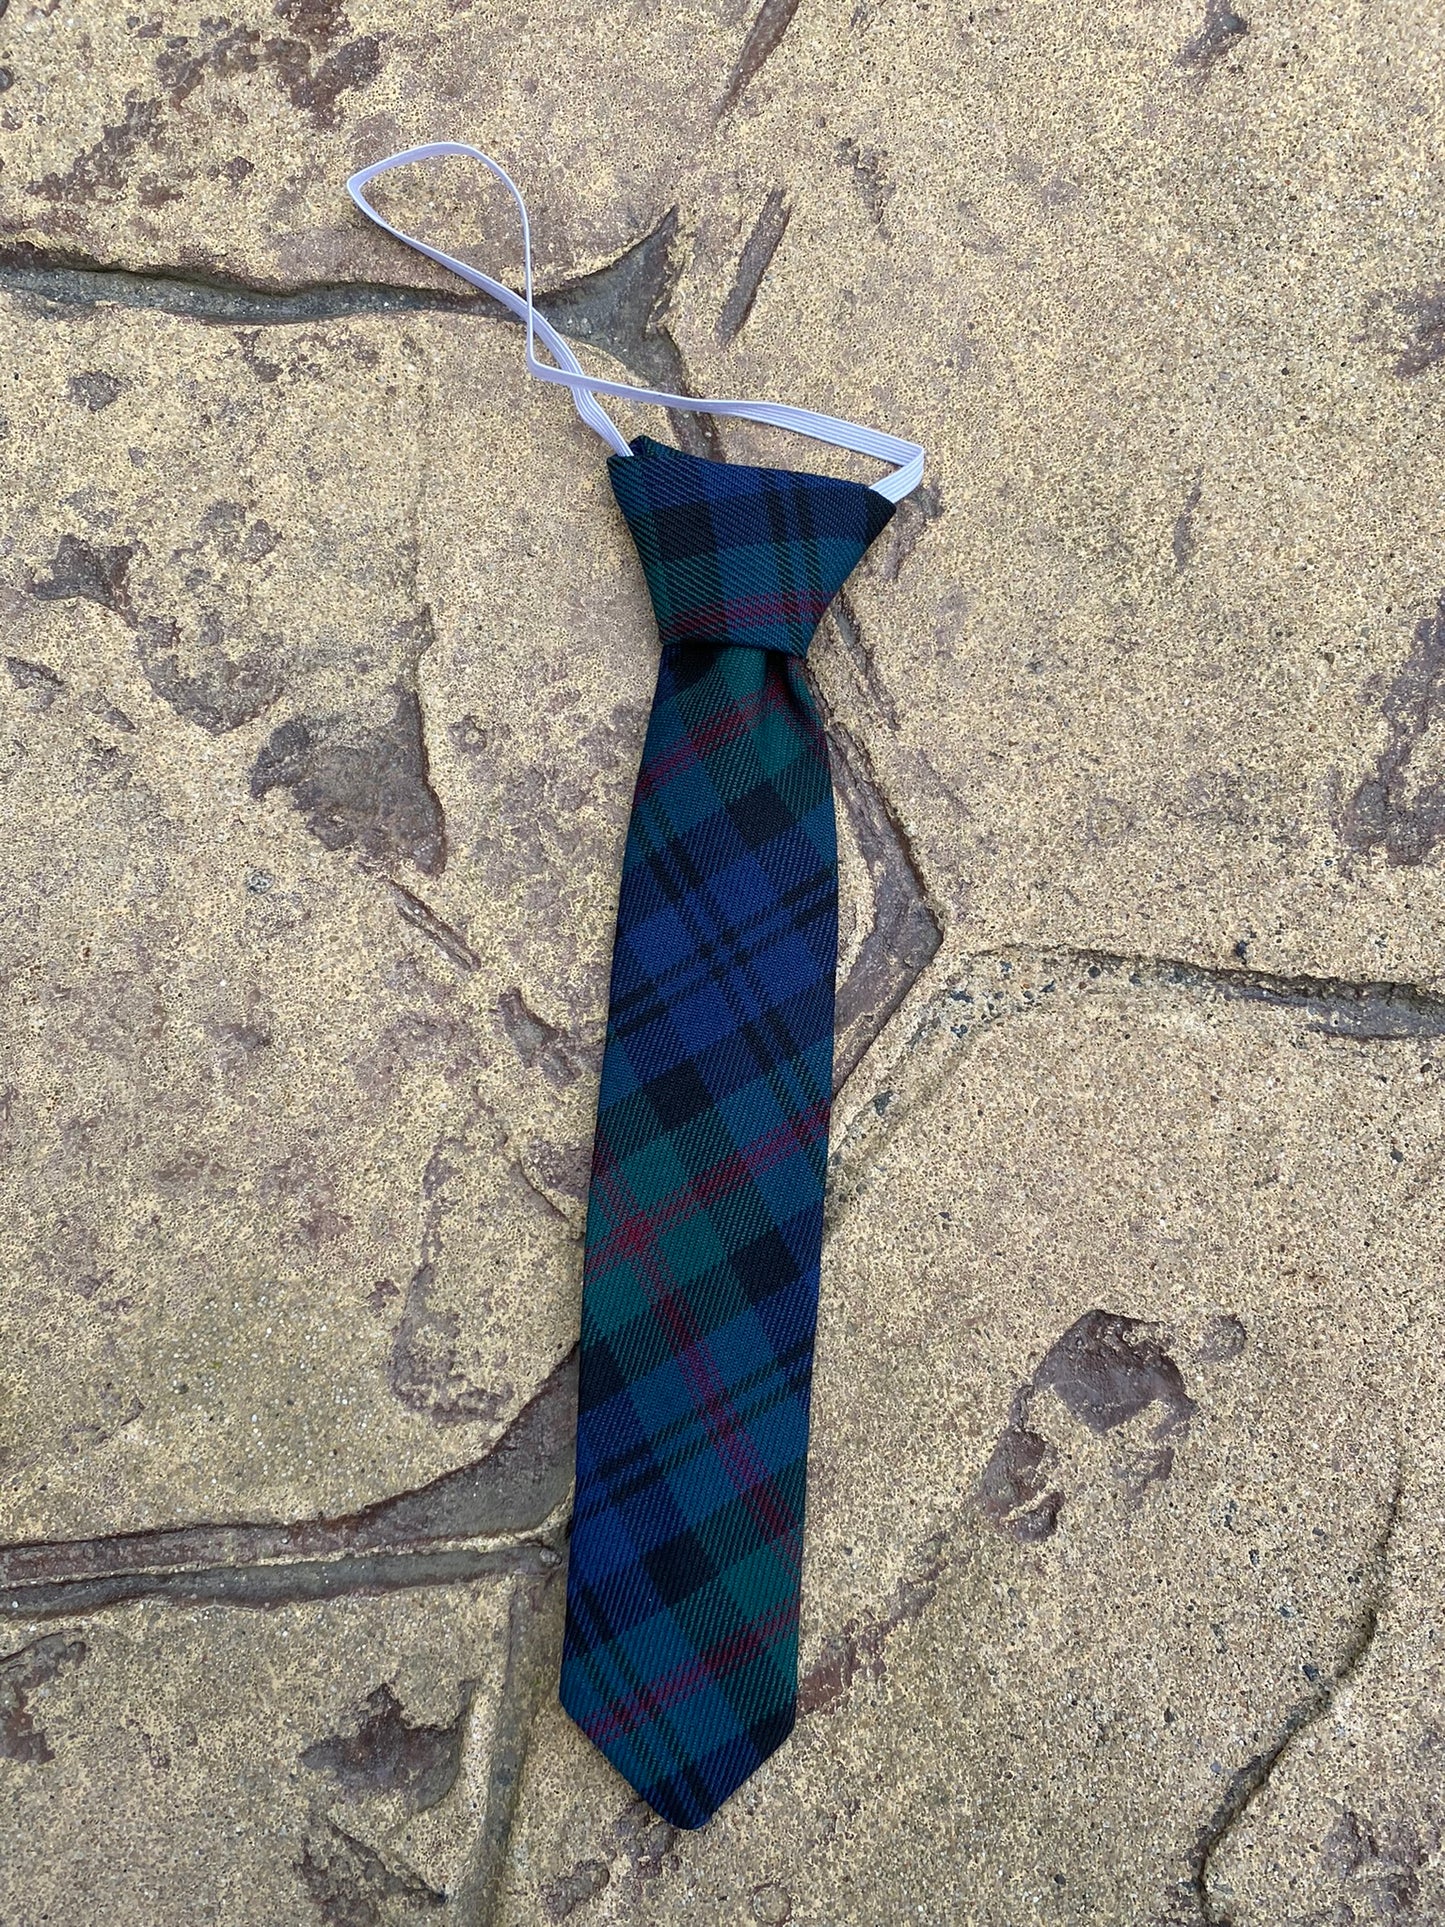 Baird TartanTrousers,Trews,Pants & Bow Tie/ Tie Set